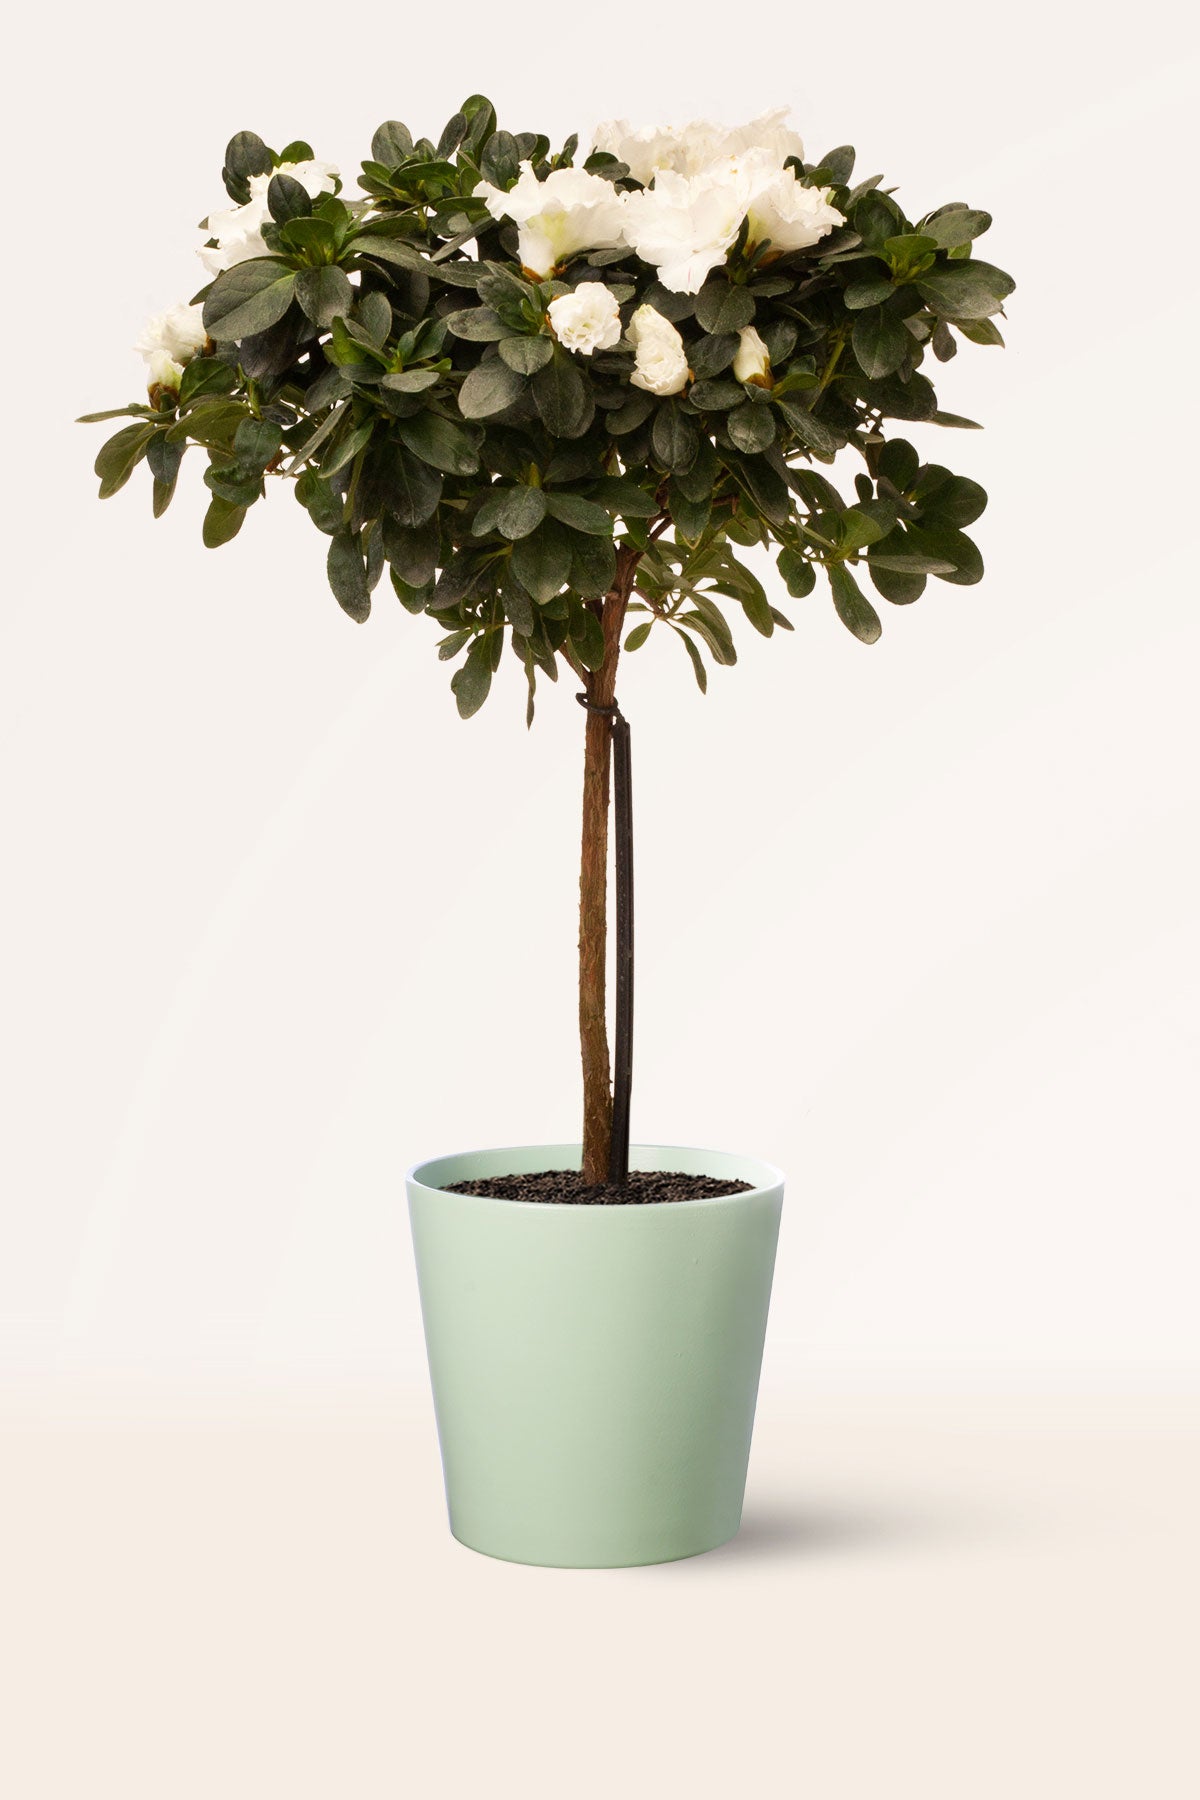 Comprar Azalea Blanca Copa (Rhododendron ) online | April Plants |  APRILPLANTS